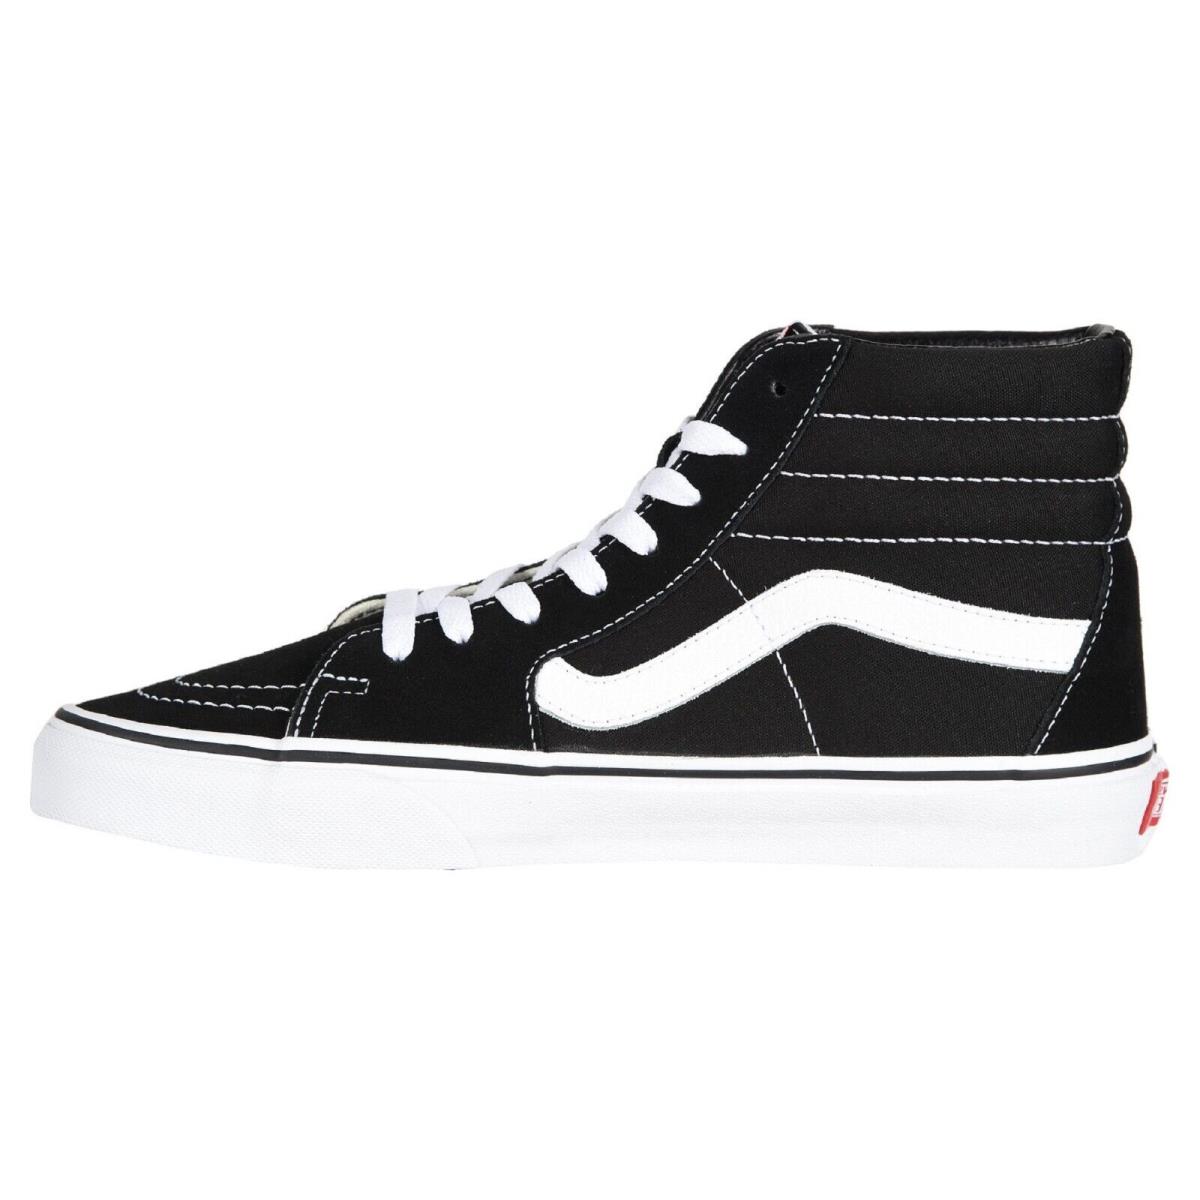 Vans Adult Unisex SK8-Hi Skate Shoe Black / Black / White VN000D5IB8C